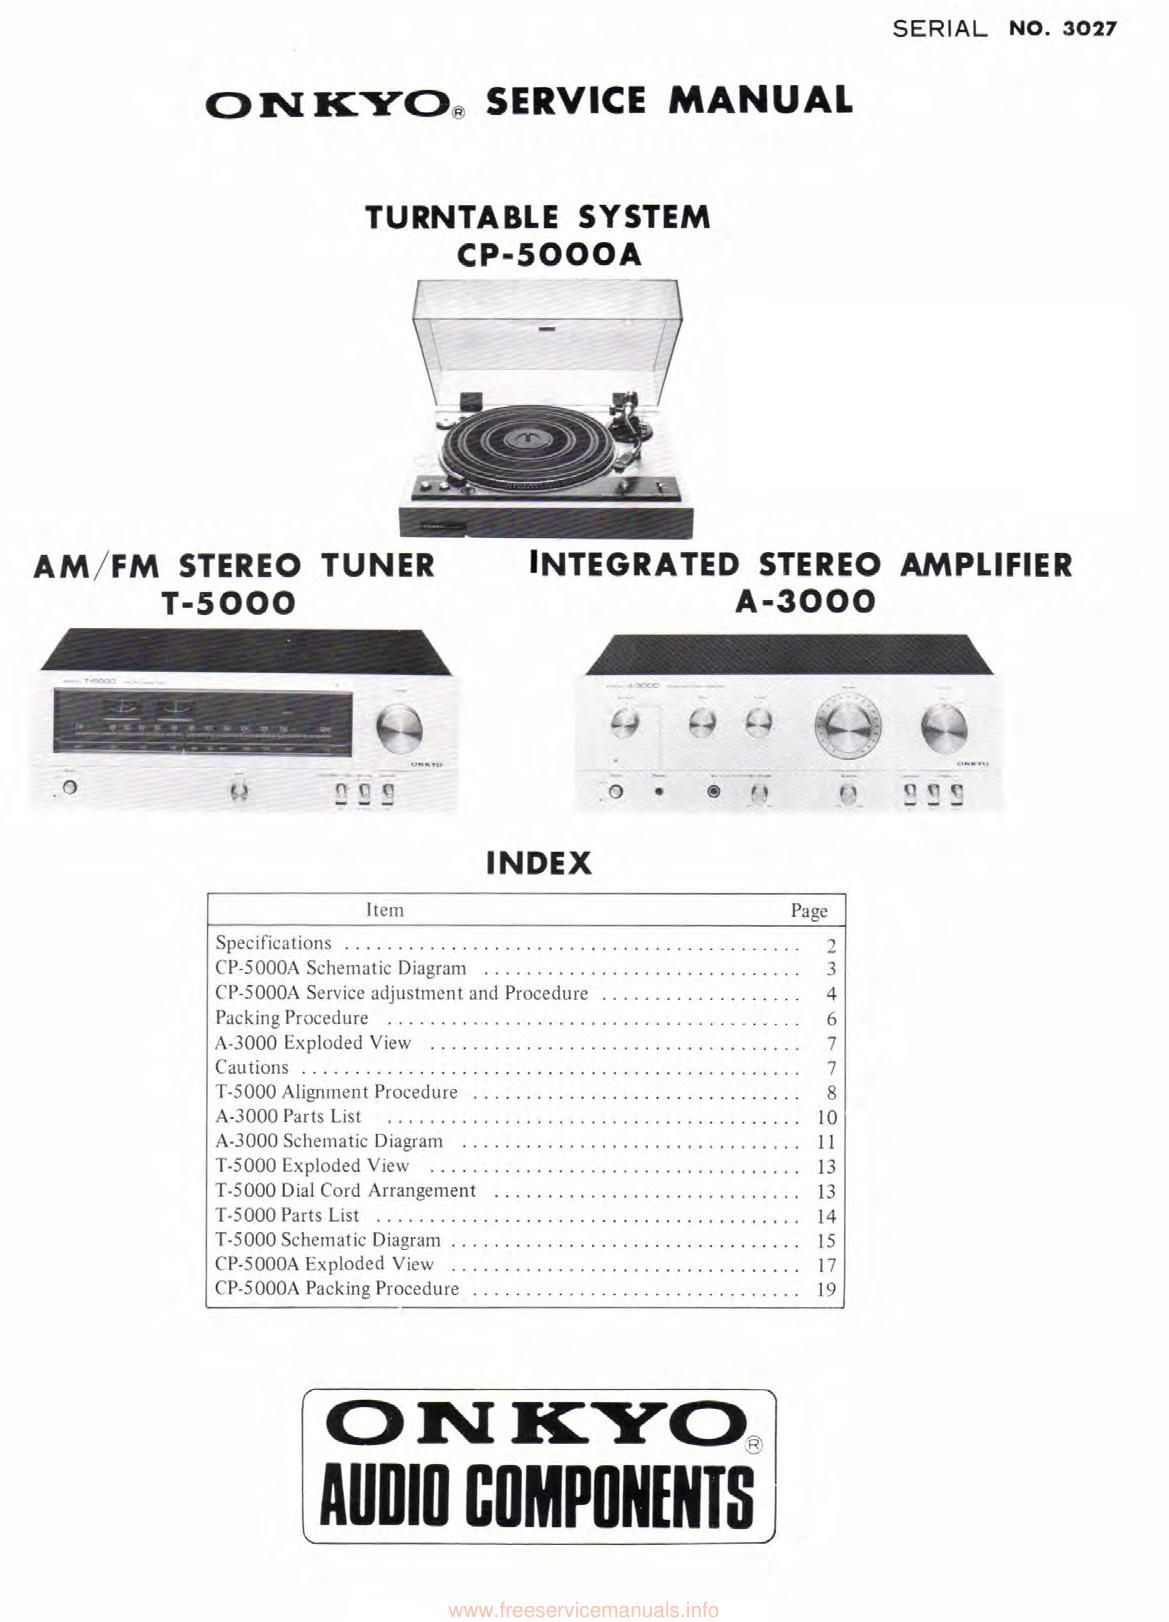 Onkyo CP 5000 A Service Manual